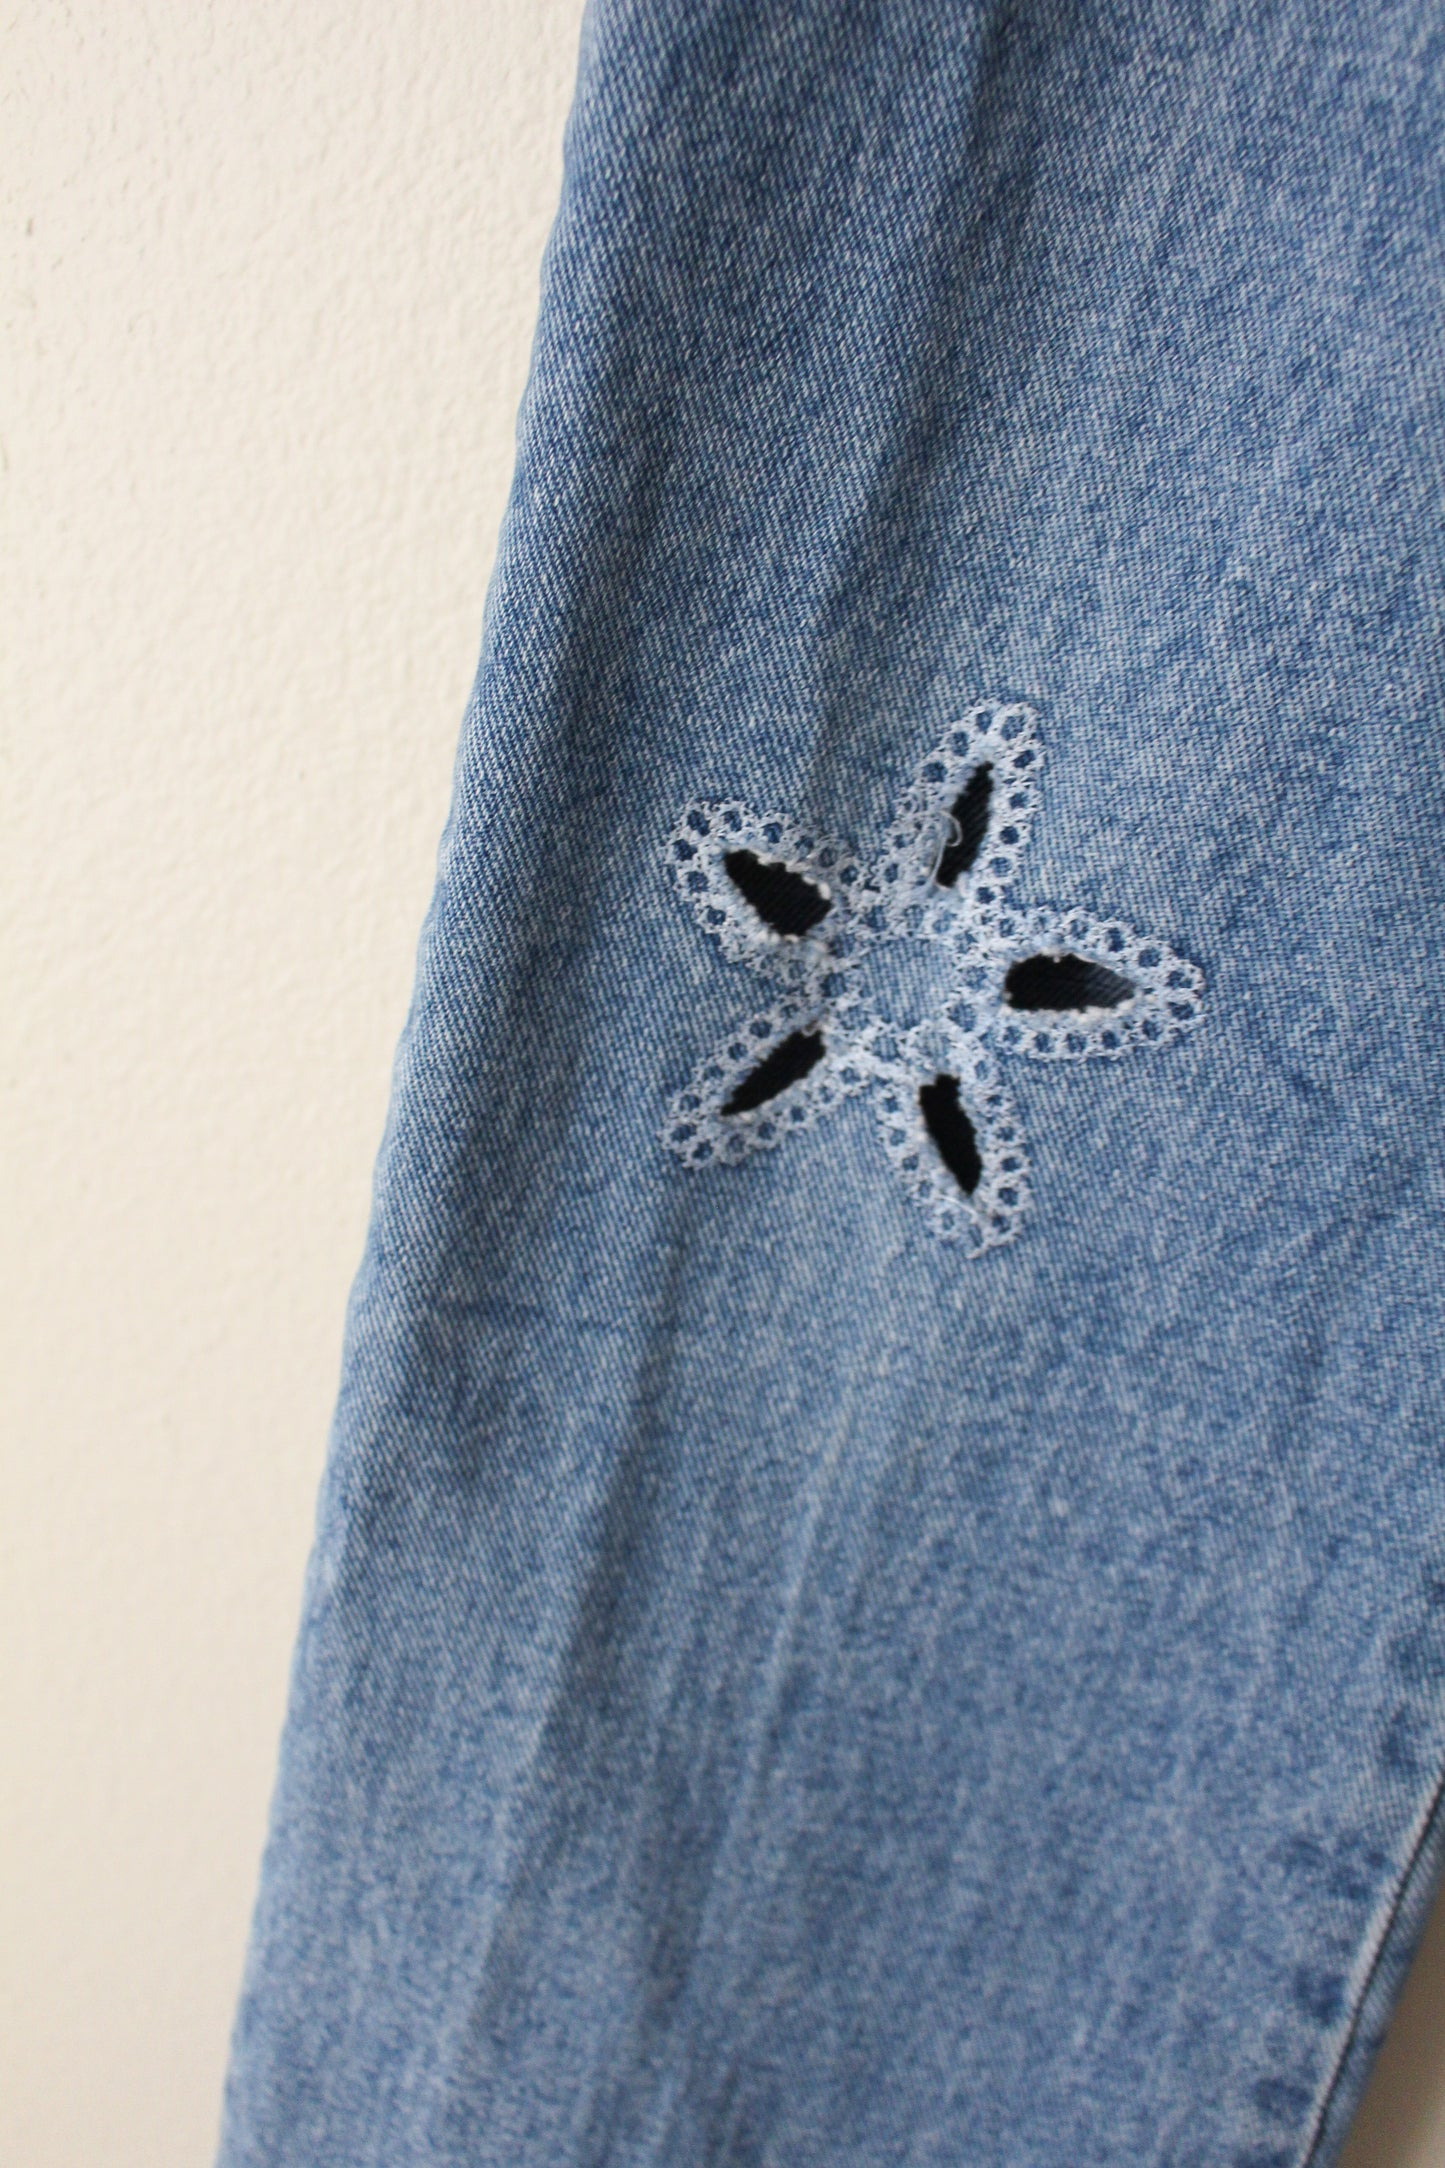 flower floral detail on jeans 